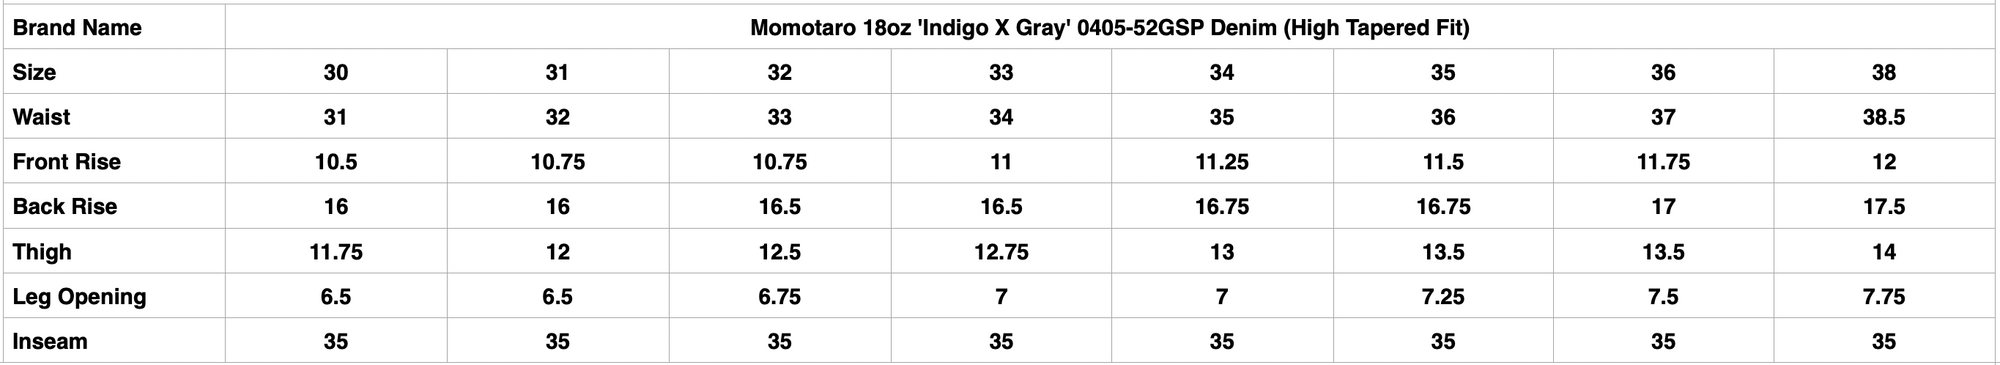 Momotaro 18oz 'Indigo X Gray' 0405-52GSP Denim (High Tapered Fit)